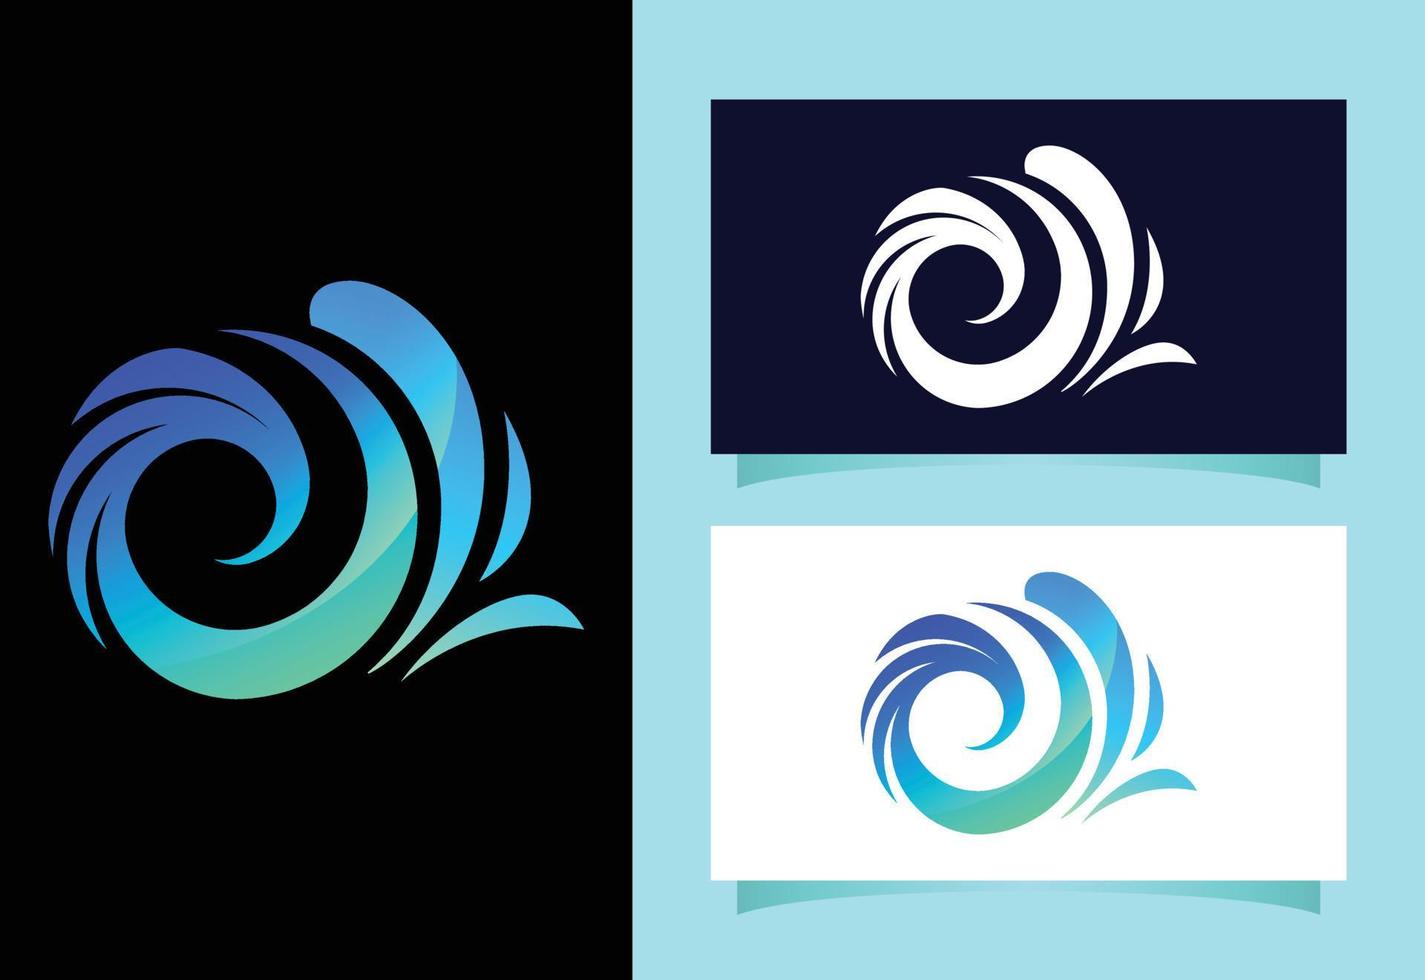 modelo de design de símbolo de sinal de logotipo de onda de água. ícone de onda do mar vetor